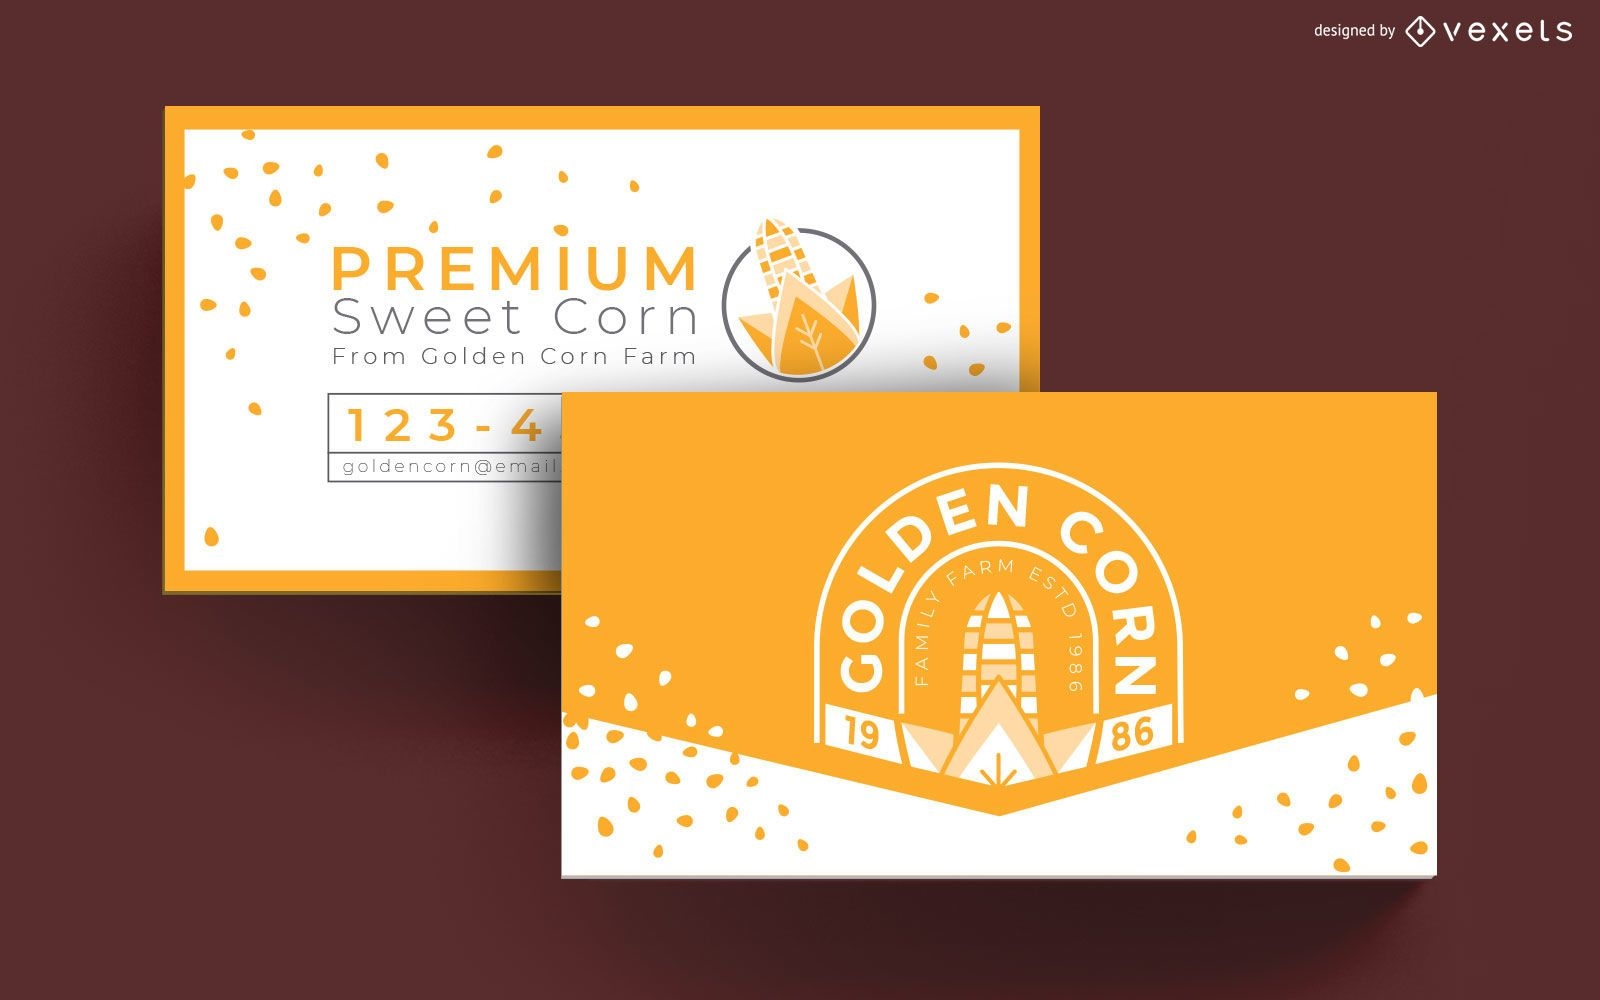 Golden corn farm business card